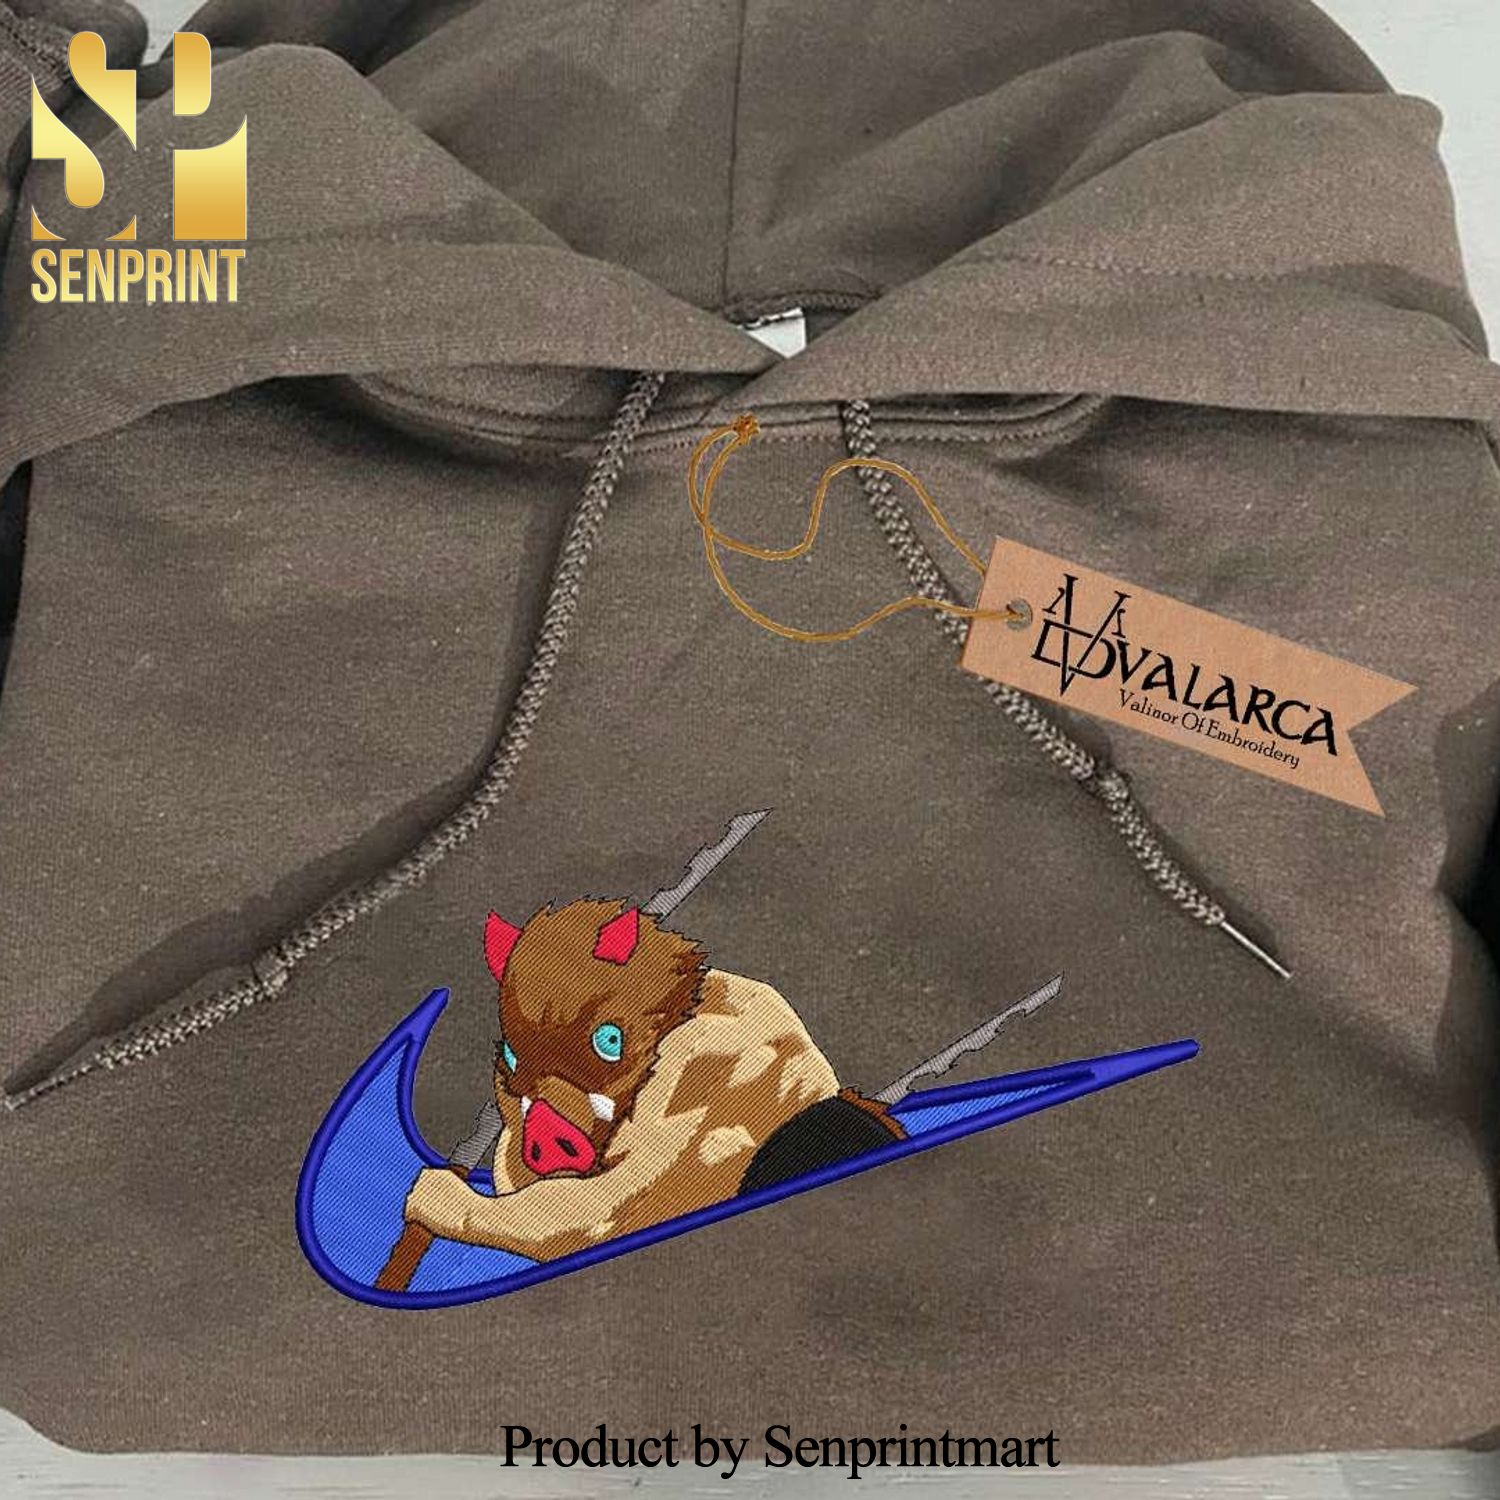 Anime Avatar Inspired Embroidered Unisex Sweatshirt Hoodie Tshirt v   inspire embroidery shop